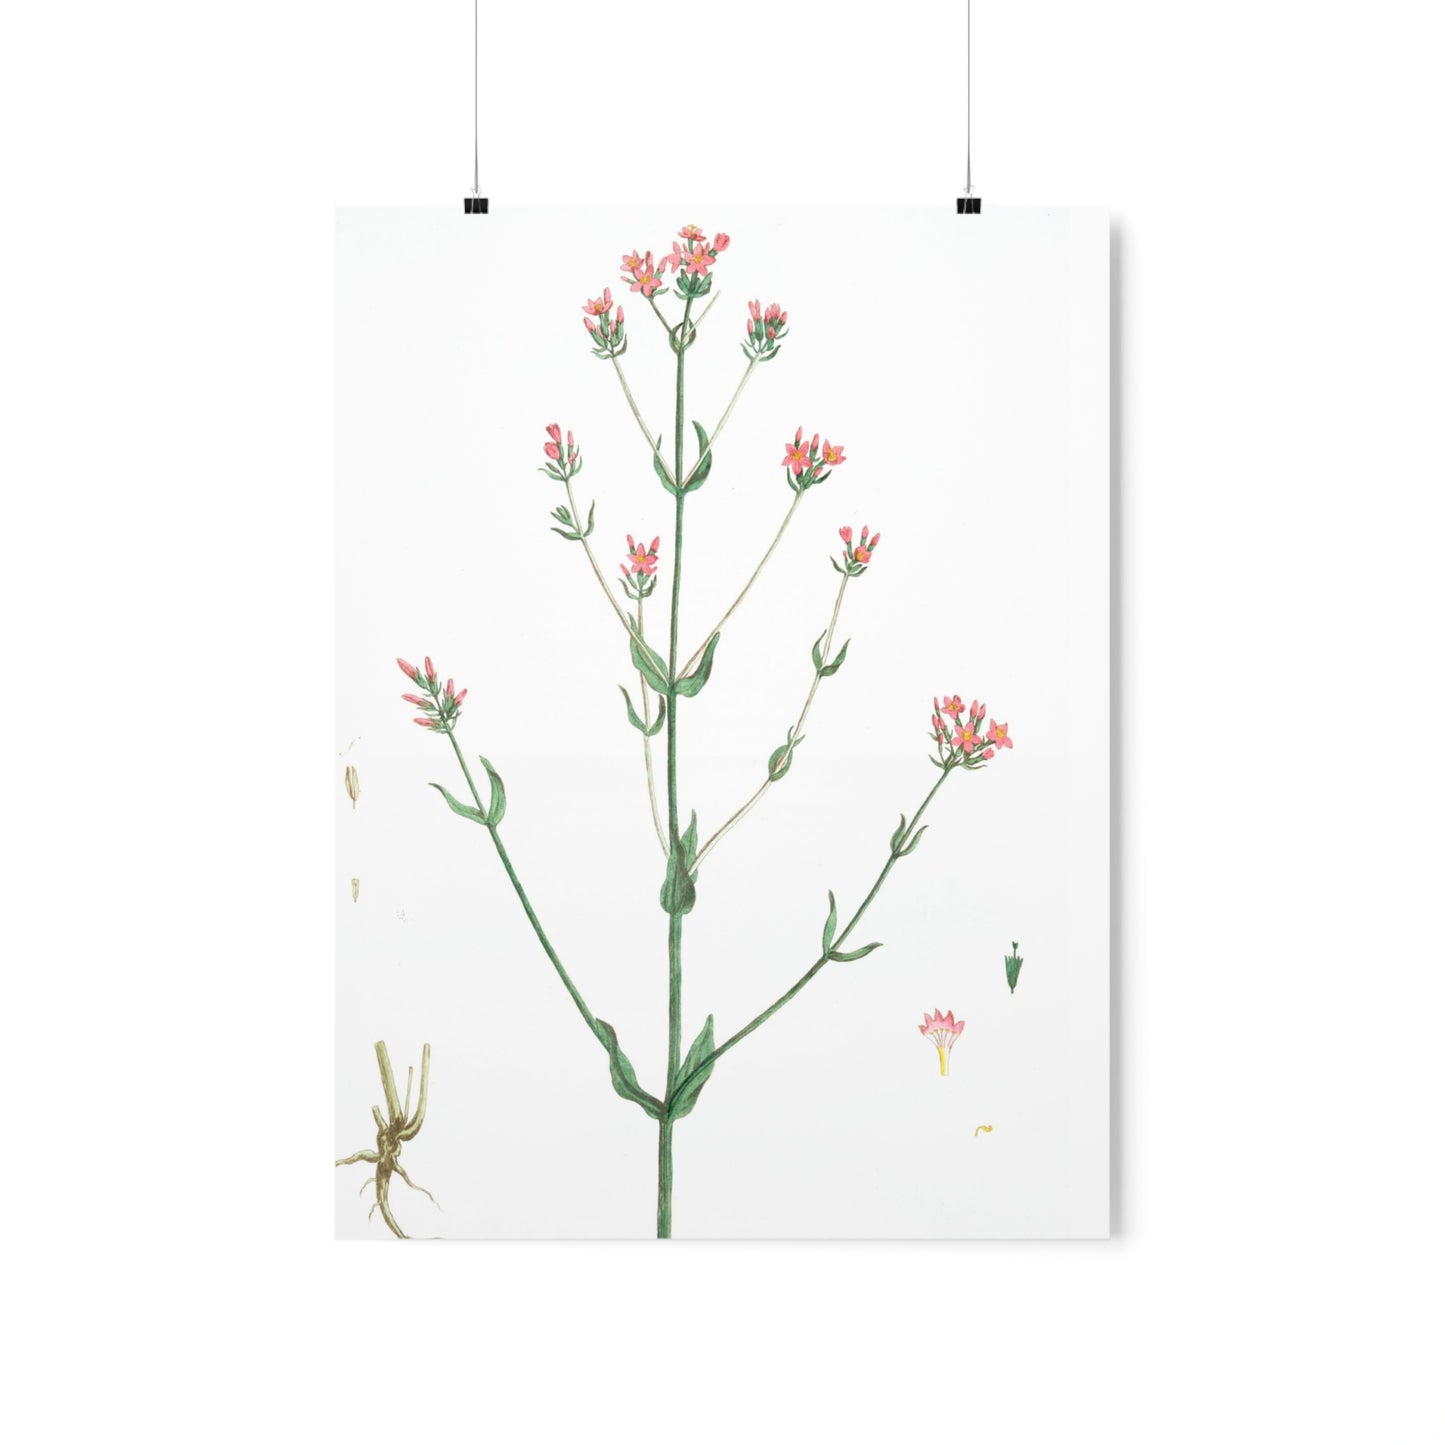 La Petite Centauree  Flower Wall Print